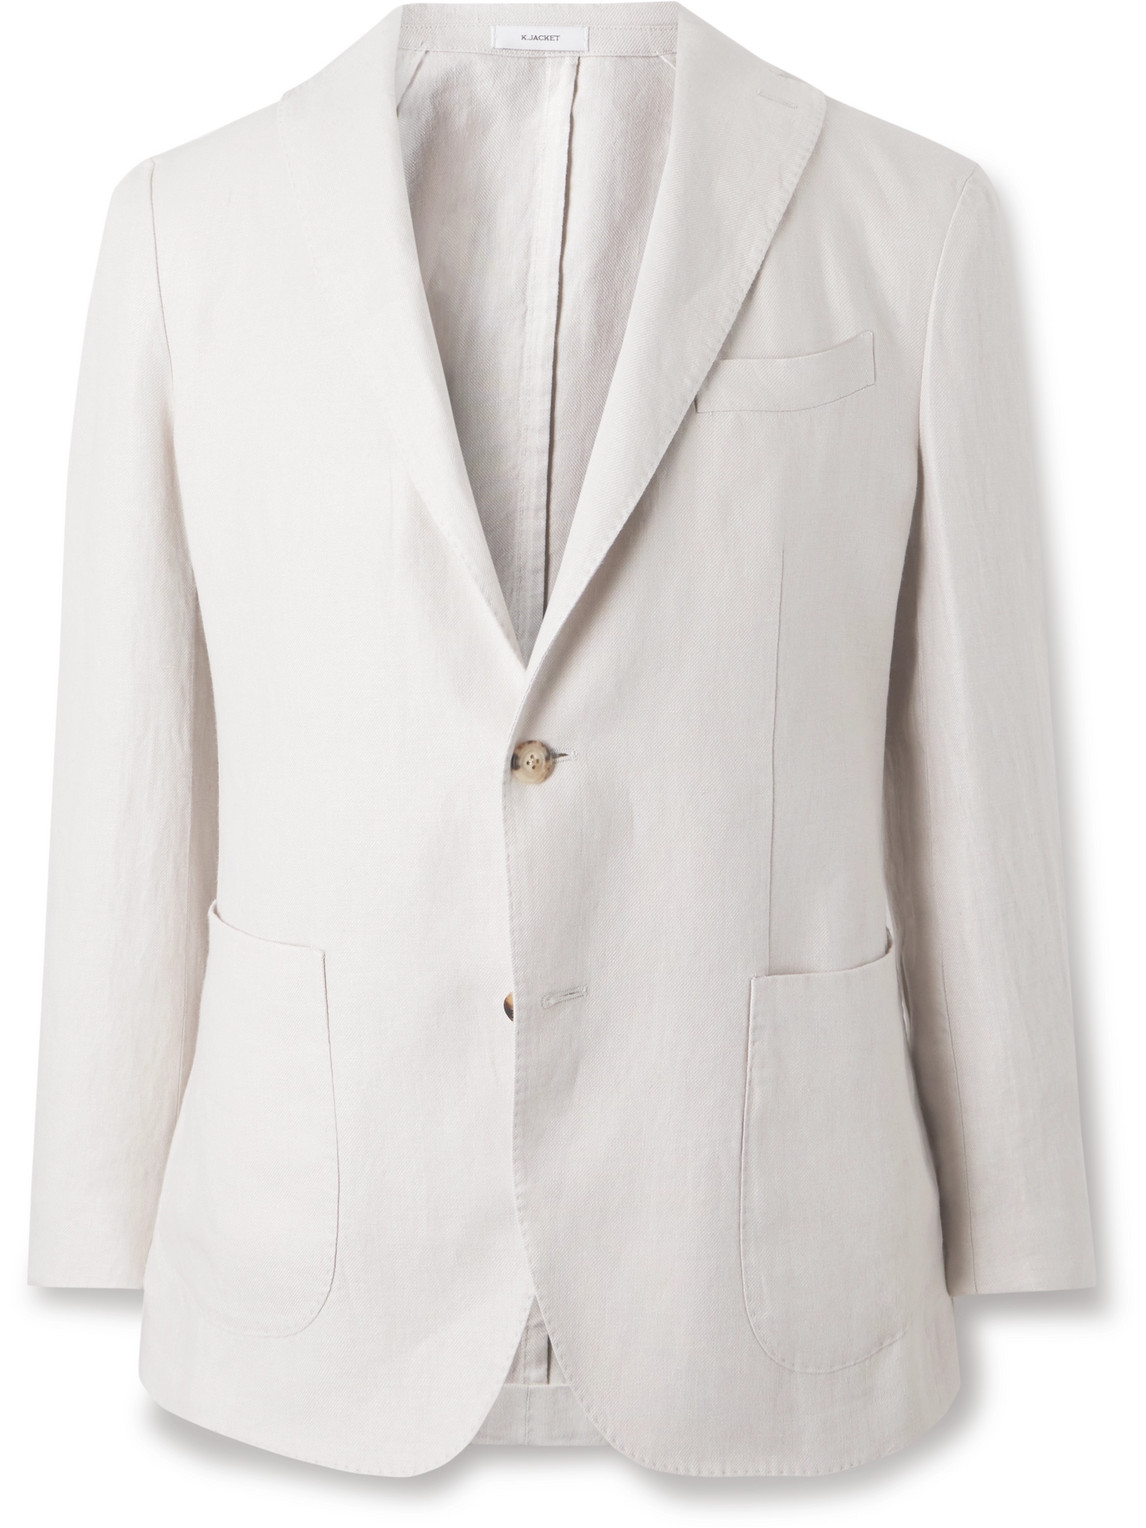 K-Jacket Unstructured Linen-Twill Suit Jacket